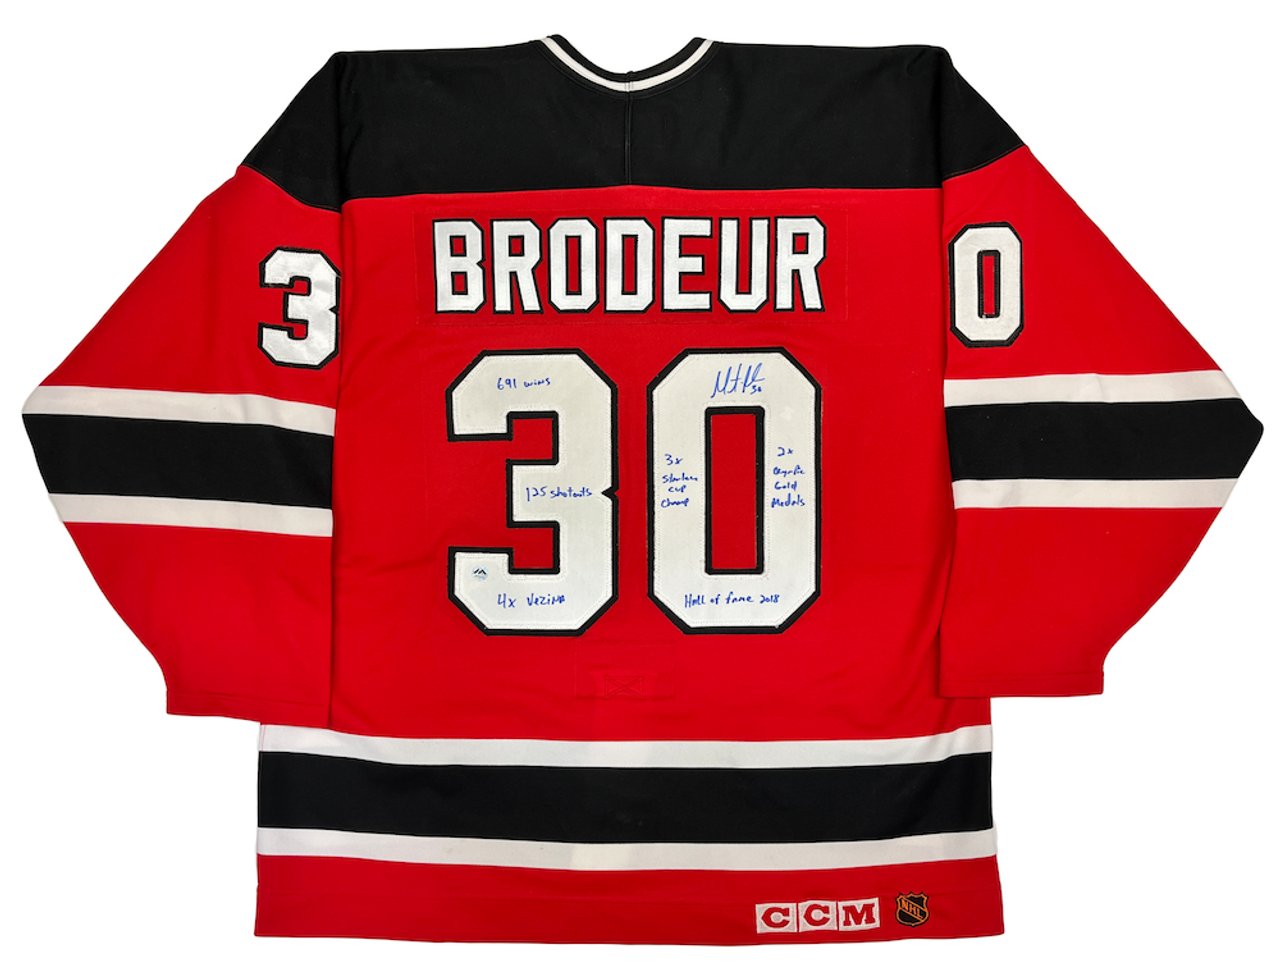 Martin Brodeur New Jersey Devils Fanatics Authentic Autographed